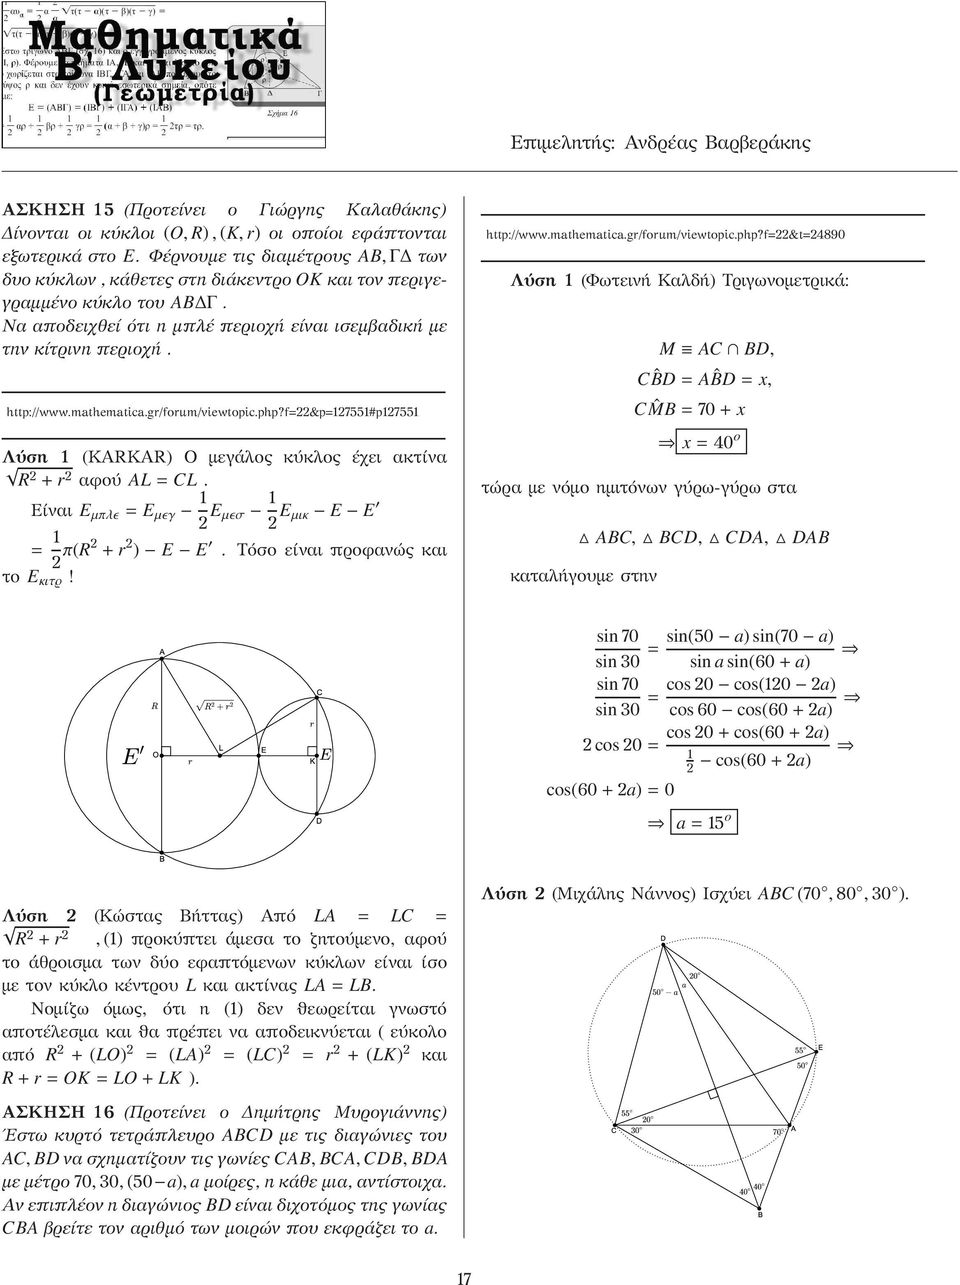 mathematica.gr/forum/viewtopic.php?f &p 755#p755 Λύση (KARKAR) Ο μεγάλος κύκλος έχει ακτίνα R + r αφού AL=CL. Είναι E µπλǫ = E µǫγ E µǫσ E µικ E E = π(r + r ) E E. Τόσο είναι προφανώς και το E κιτ!